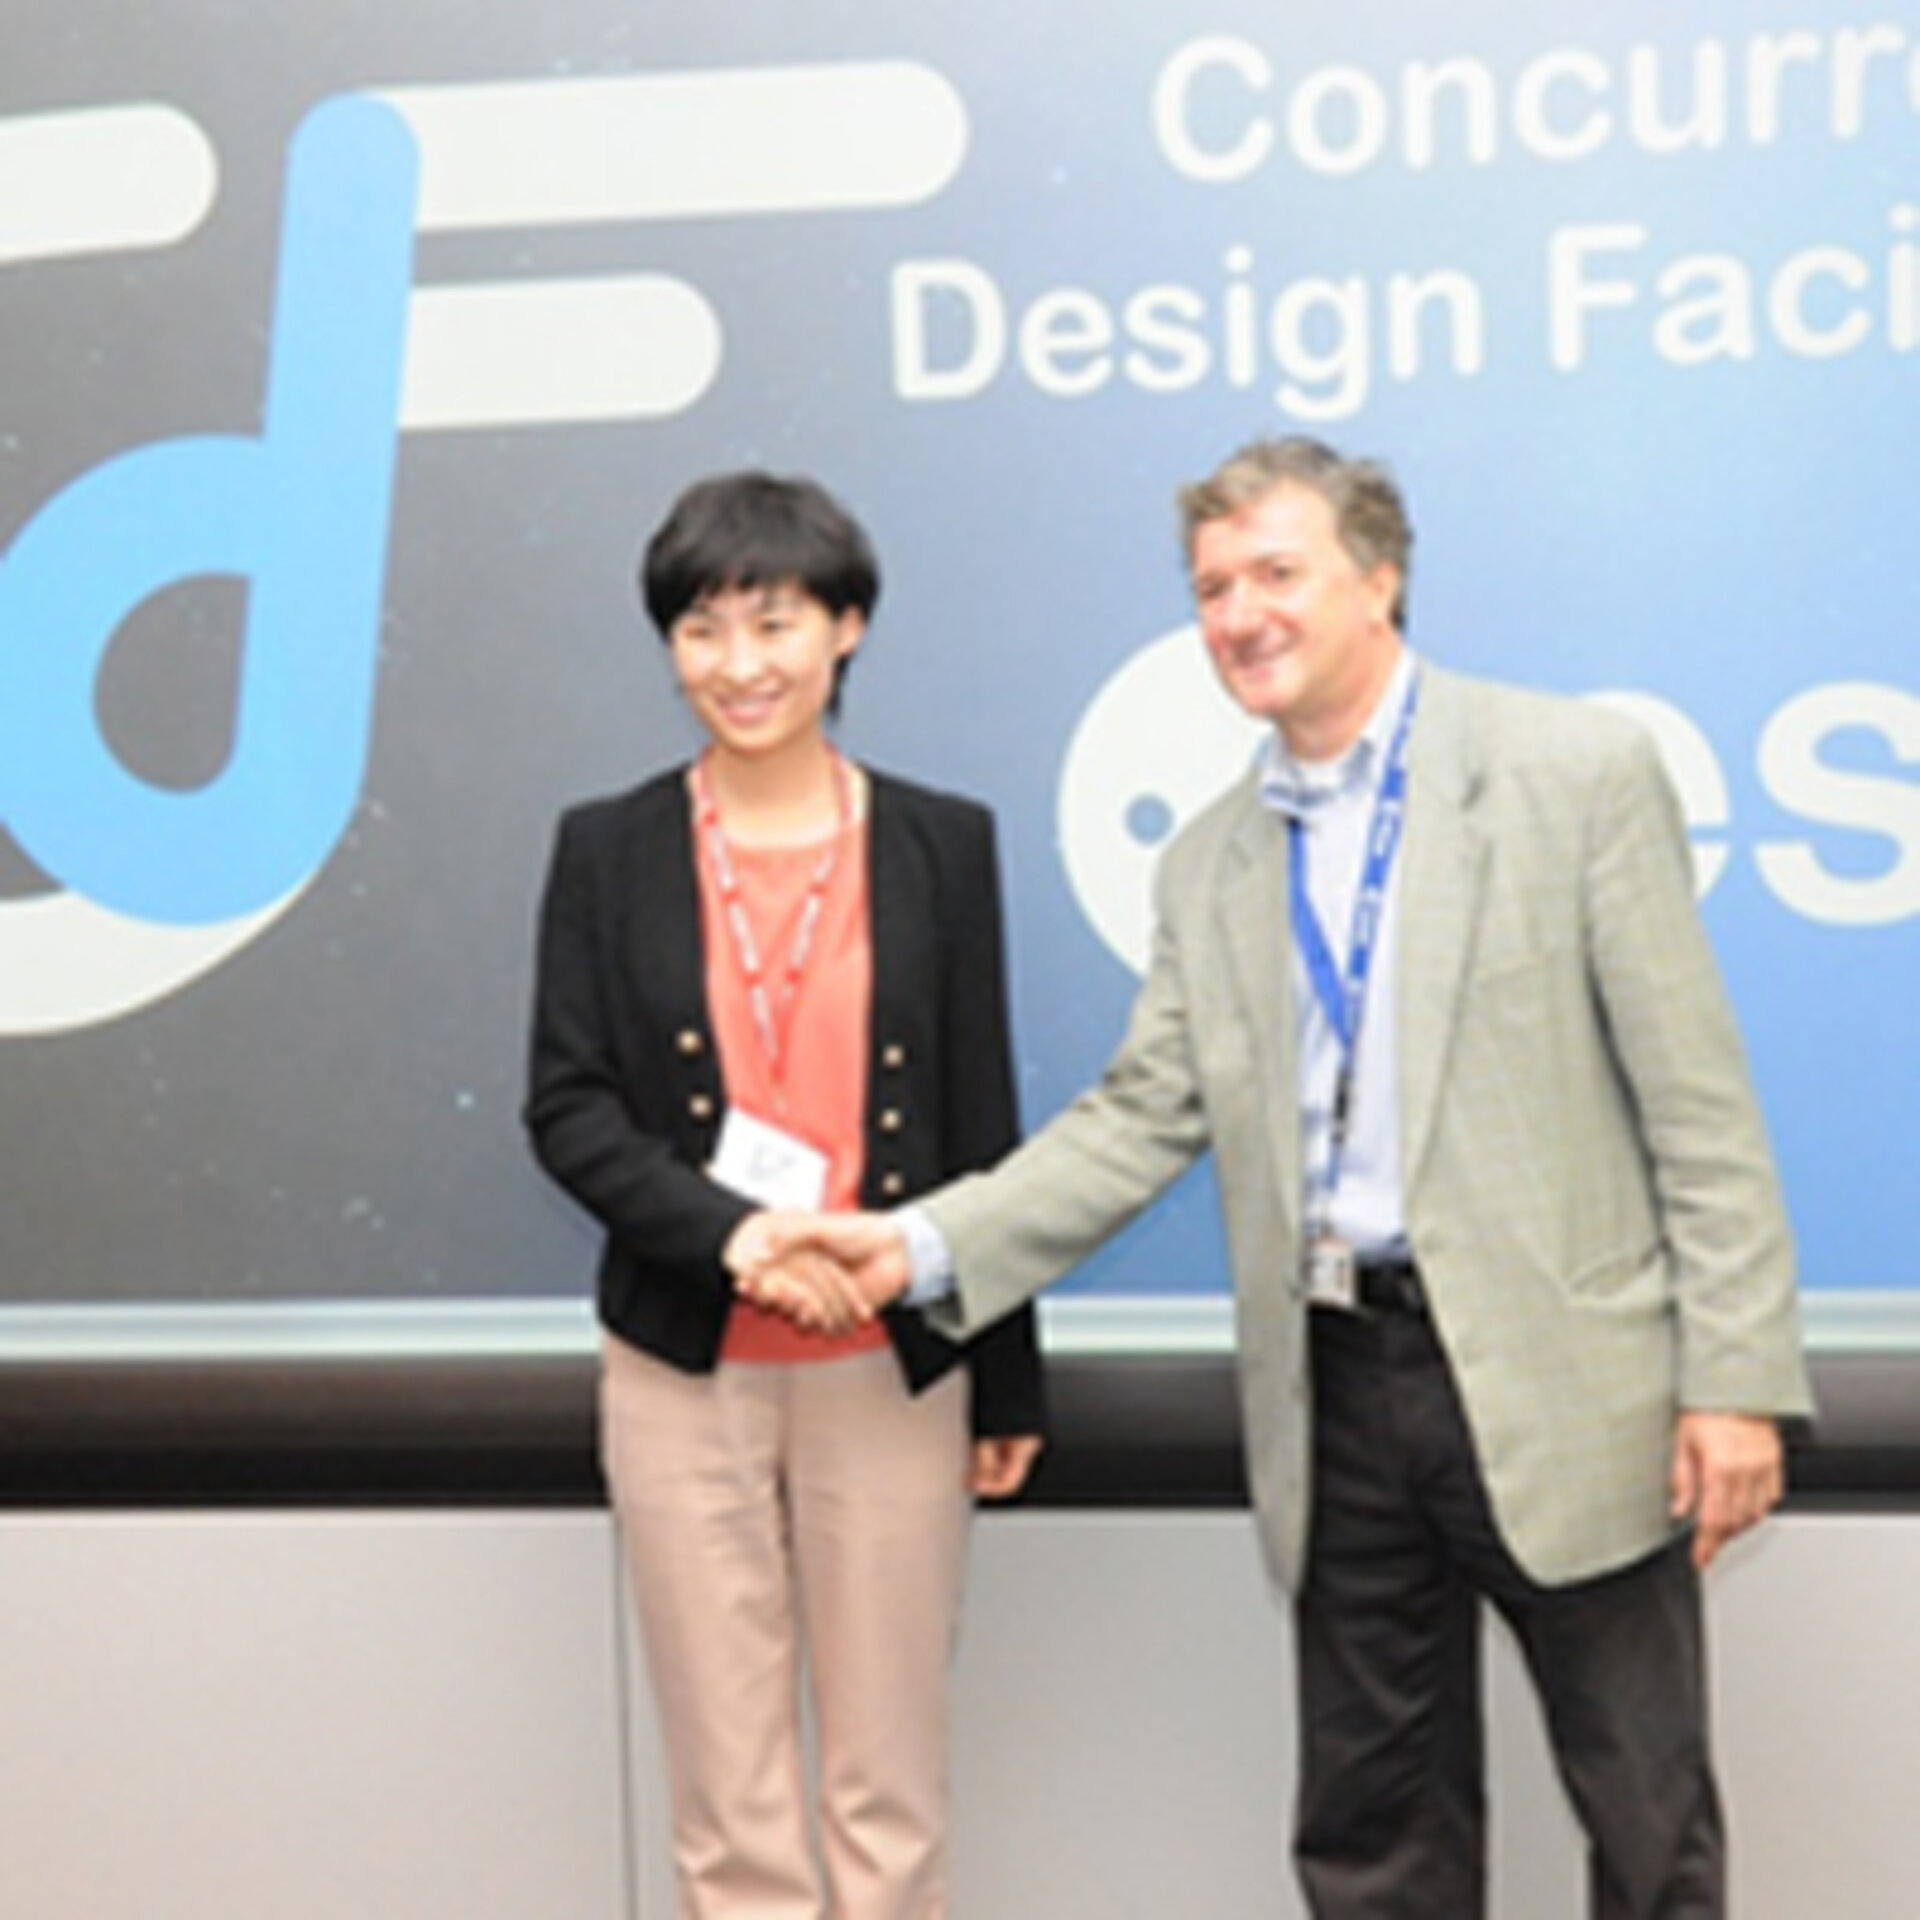 Mrs Liu Yang (astronaut) and Mr Bandecchi in the CDF